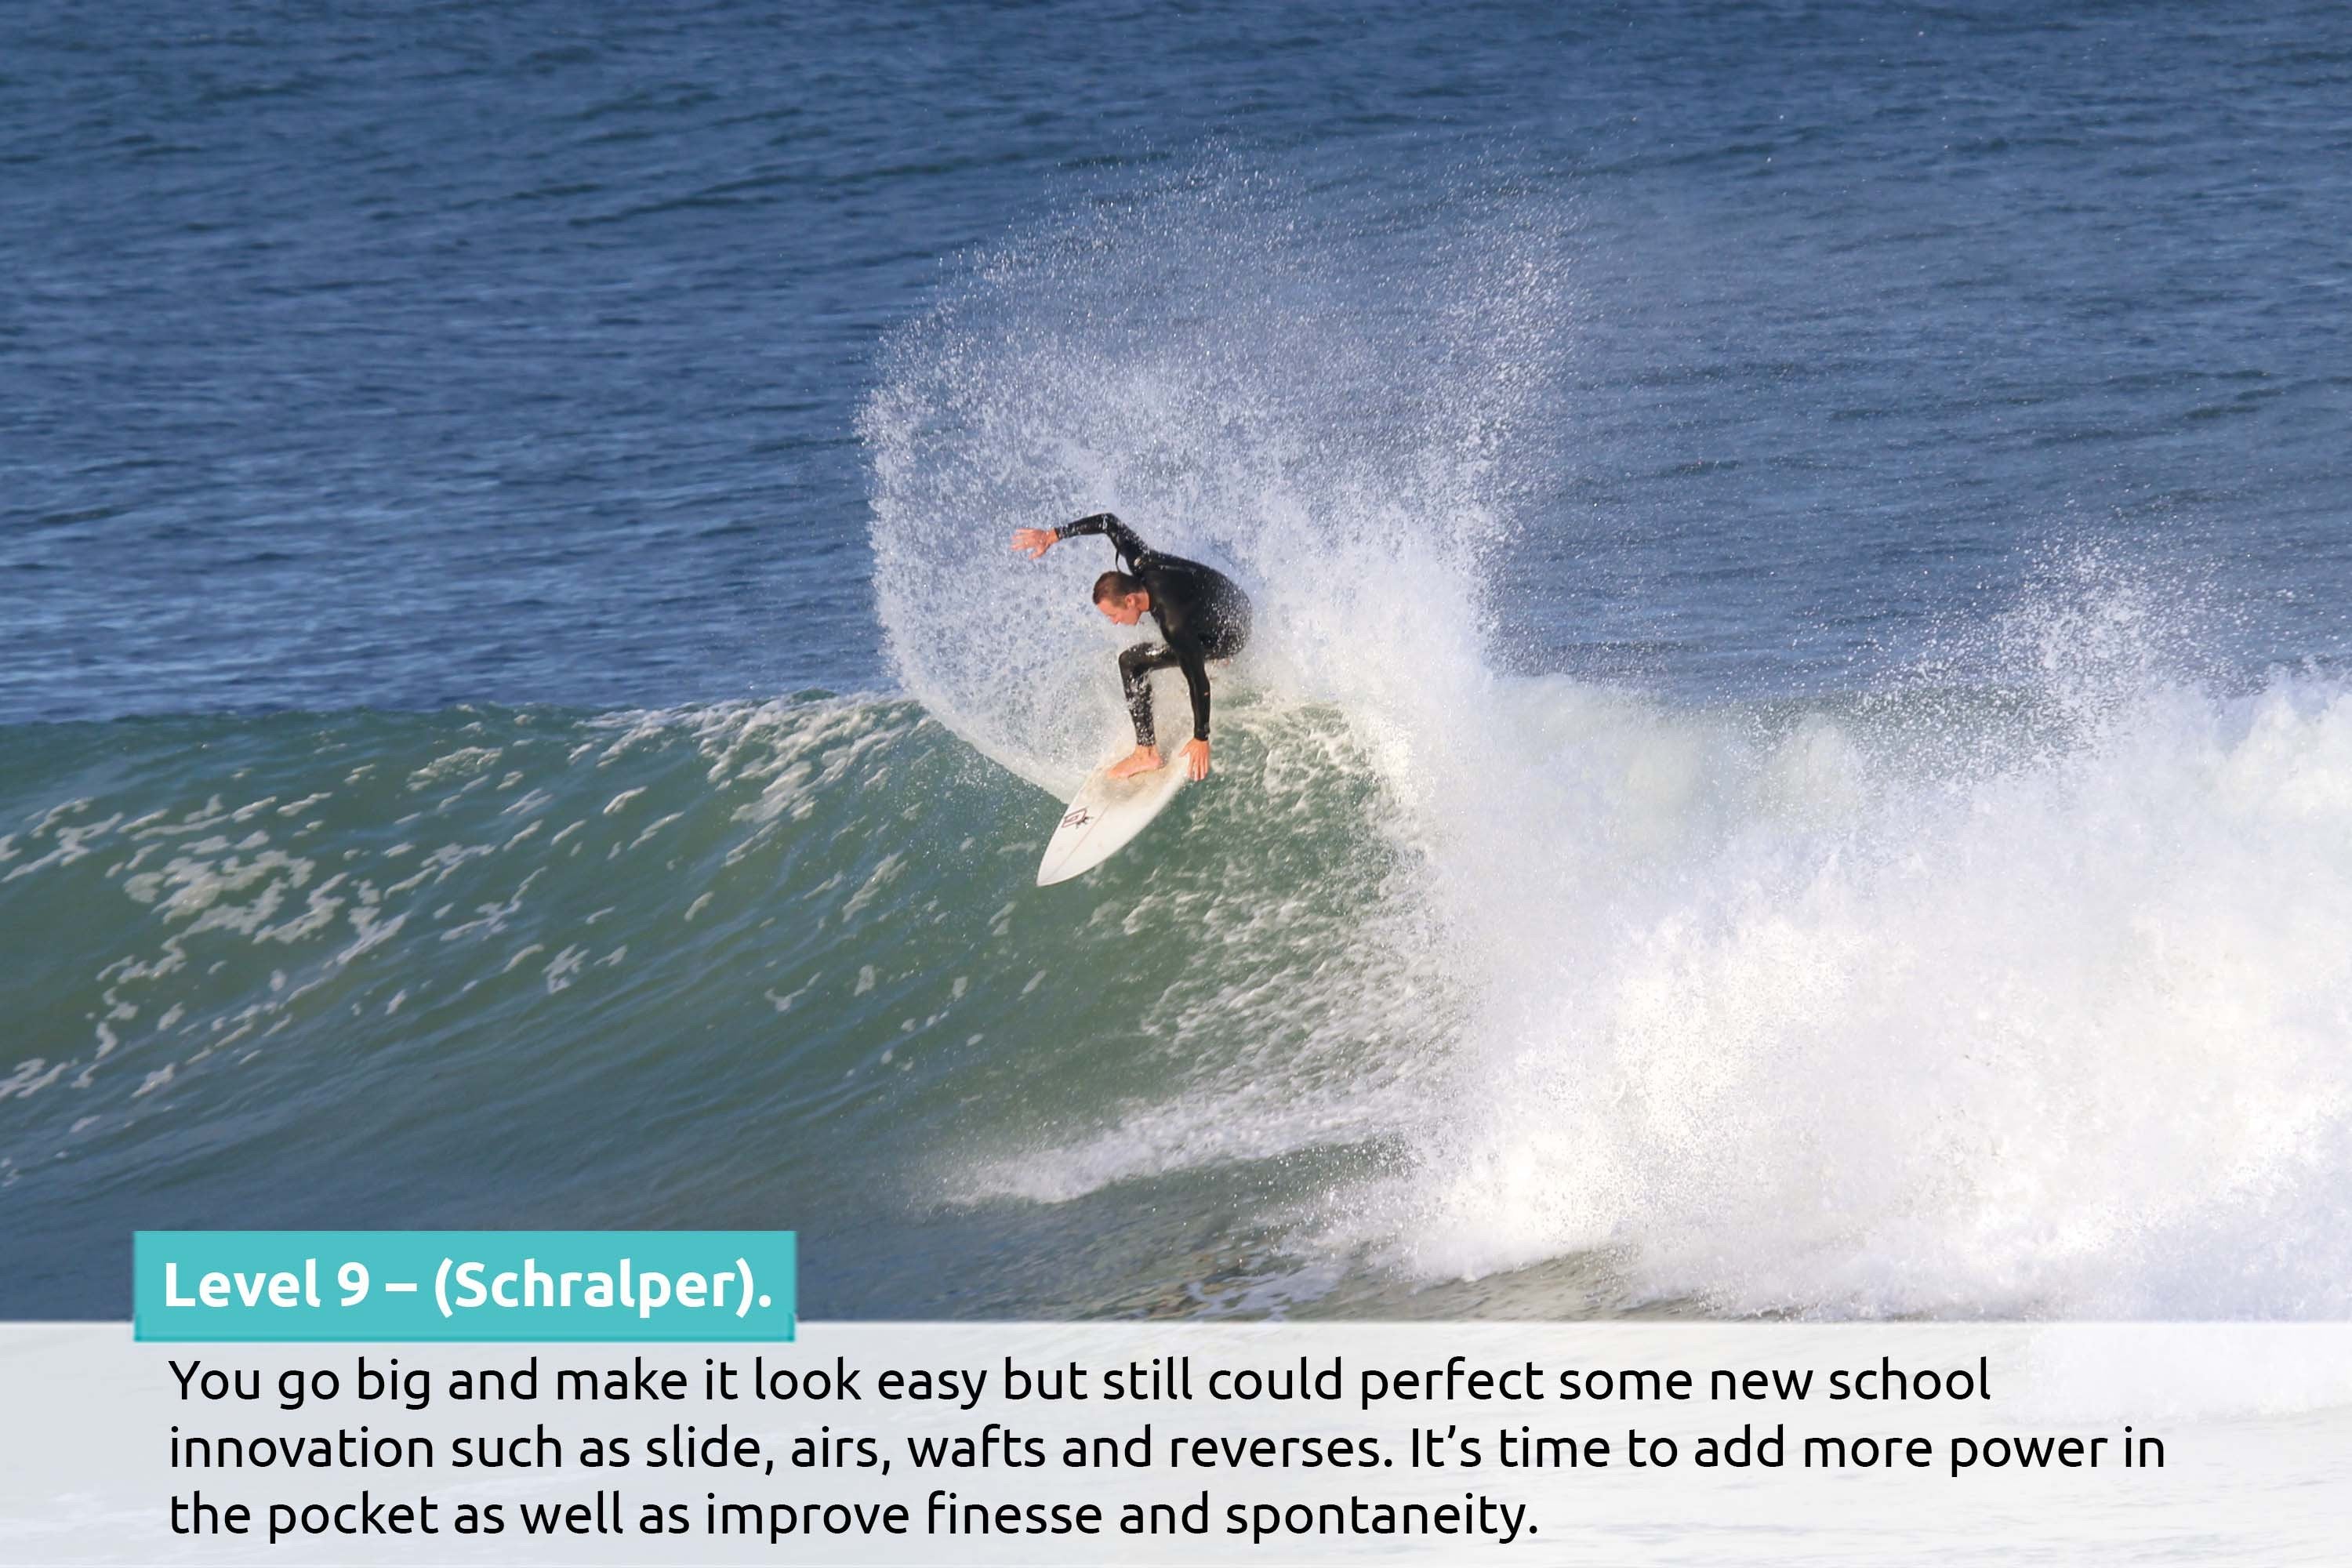 Schralper, Learn How to Surf Better